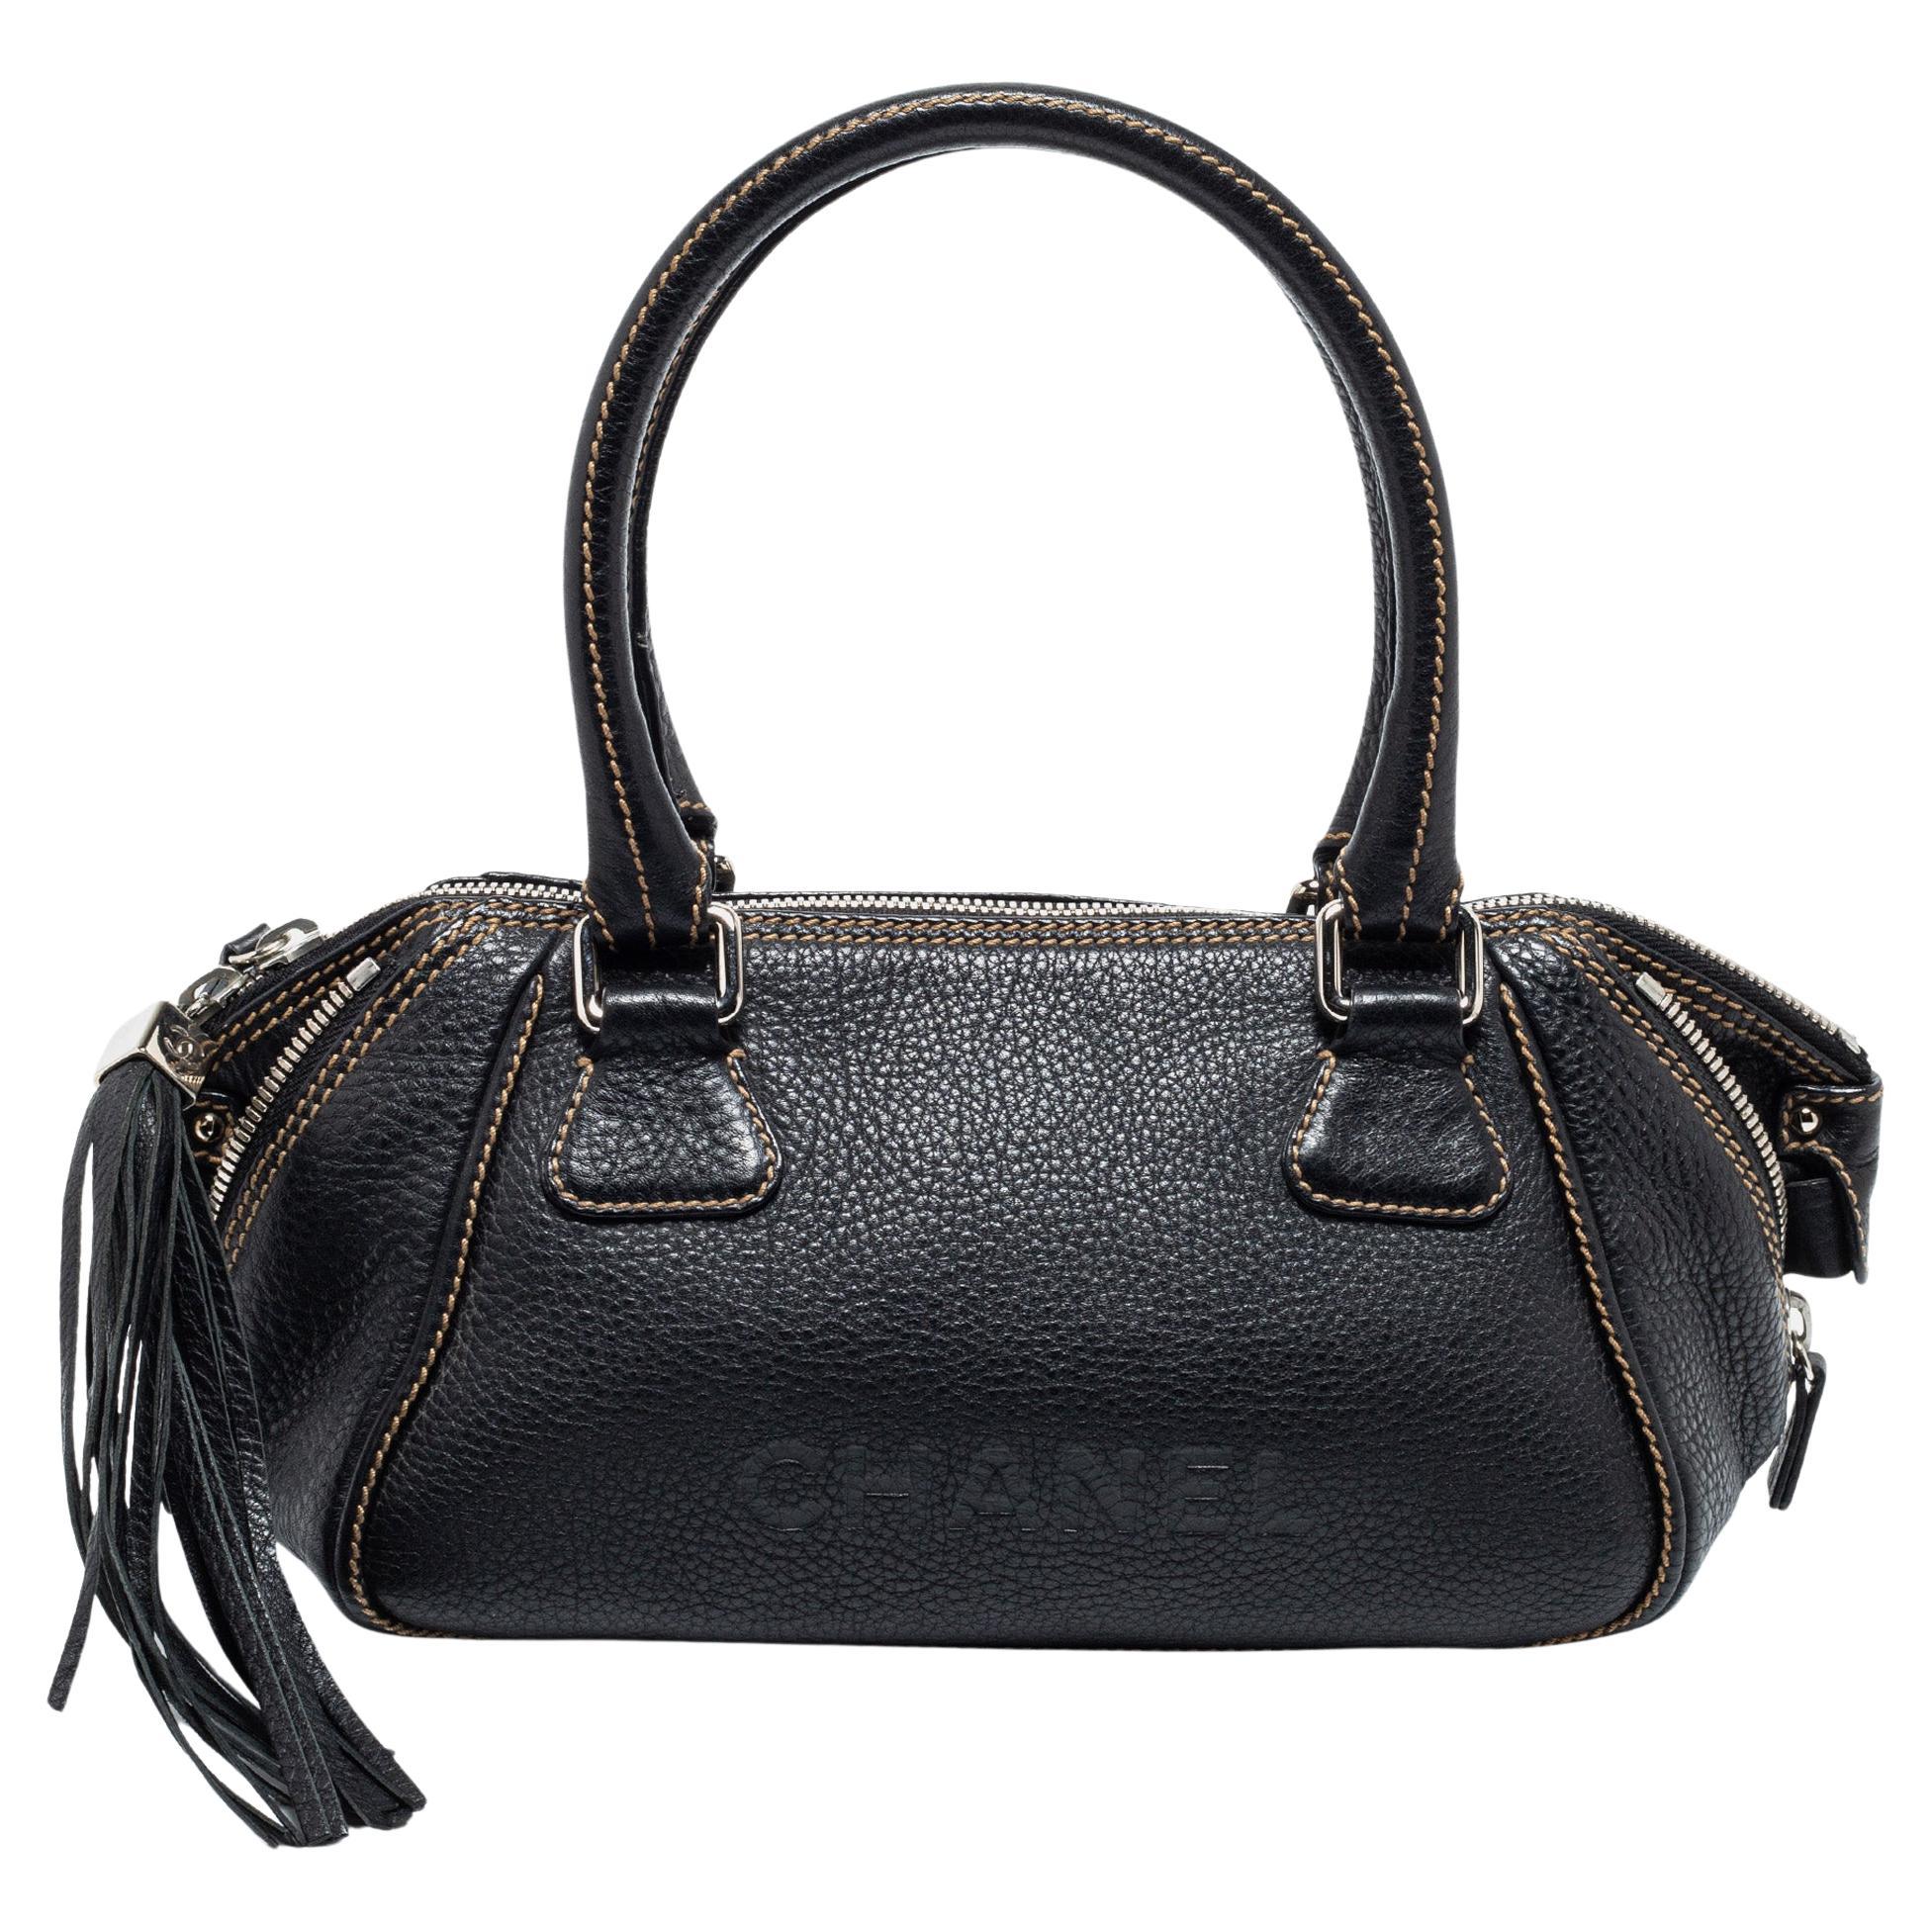 Chanel Black Leather LAX Tassel Bowler Bag